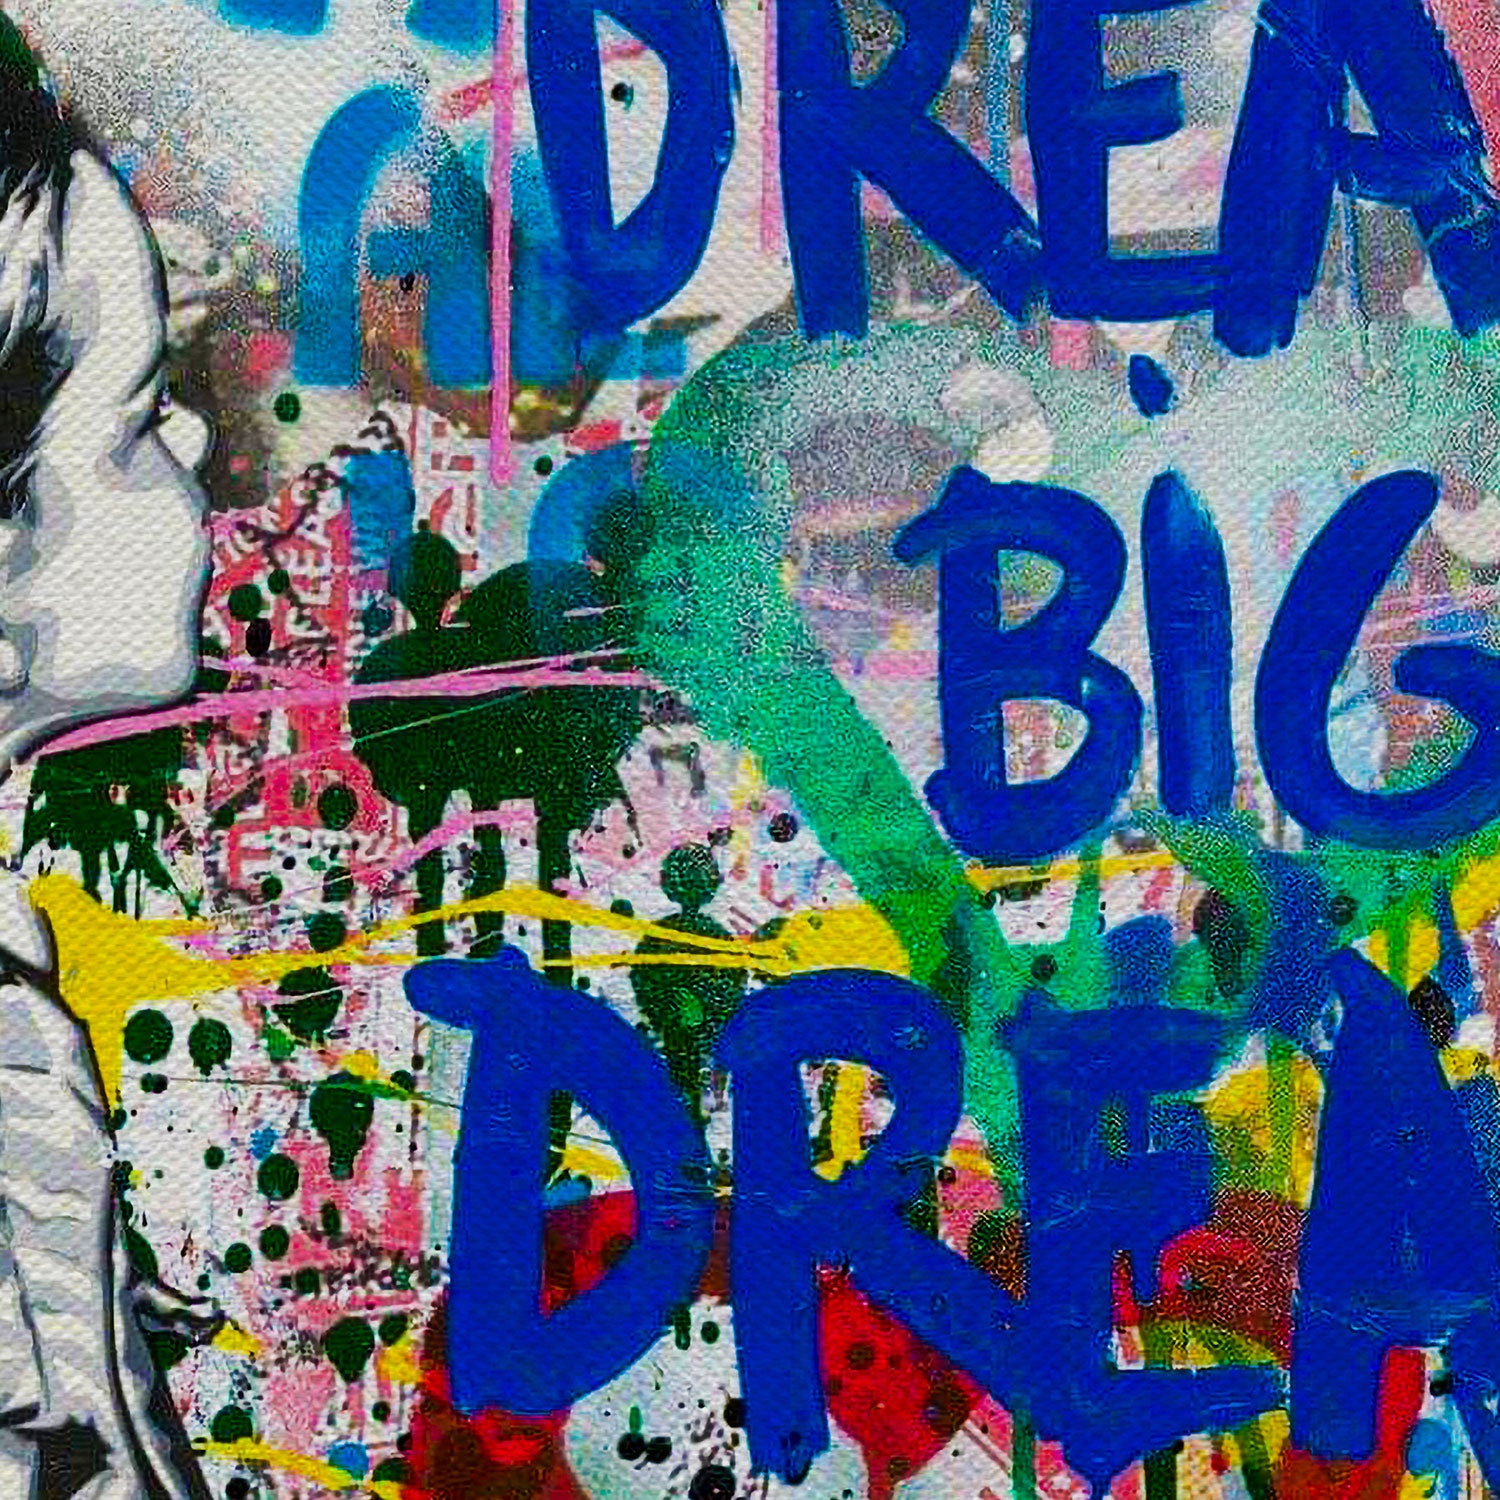 Banksy Dream Big Dreams Canvas Wall Art